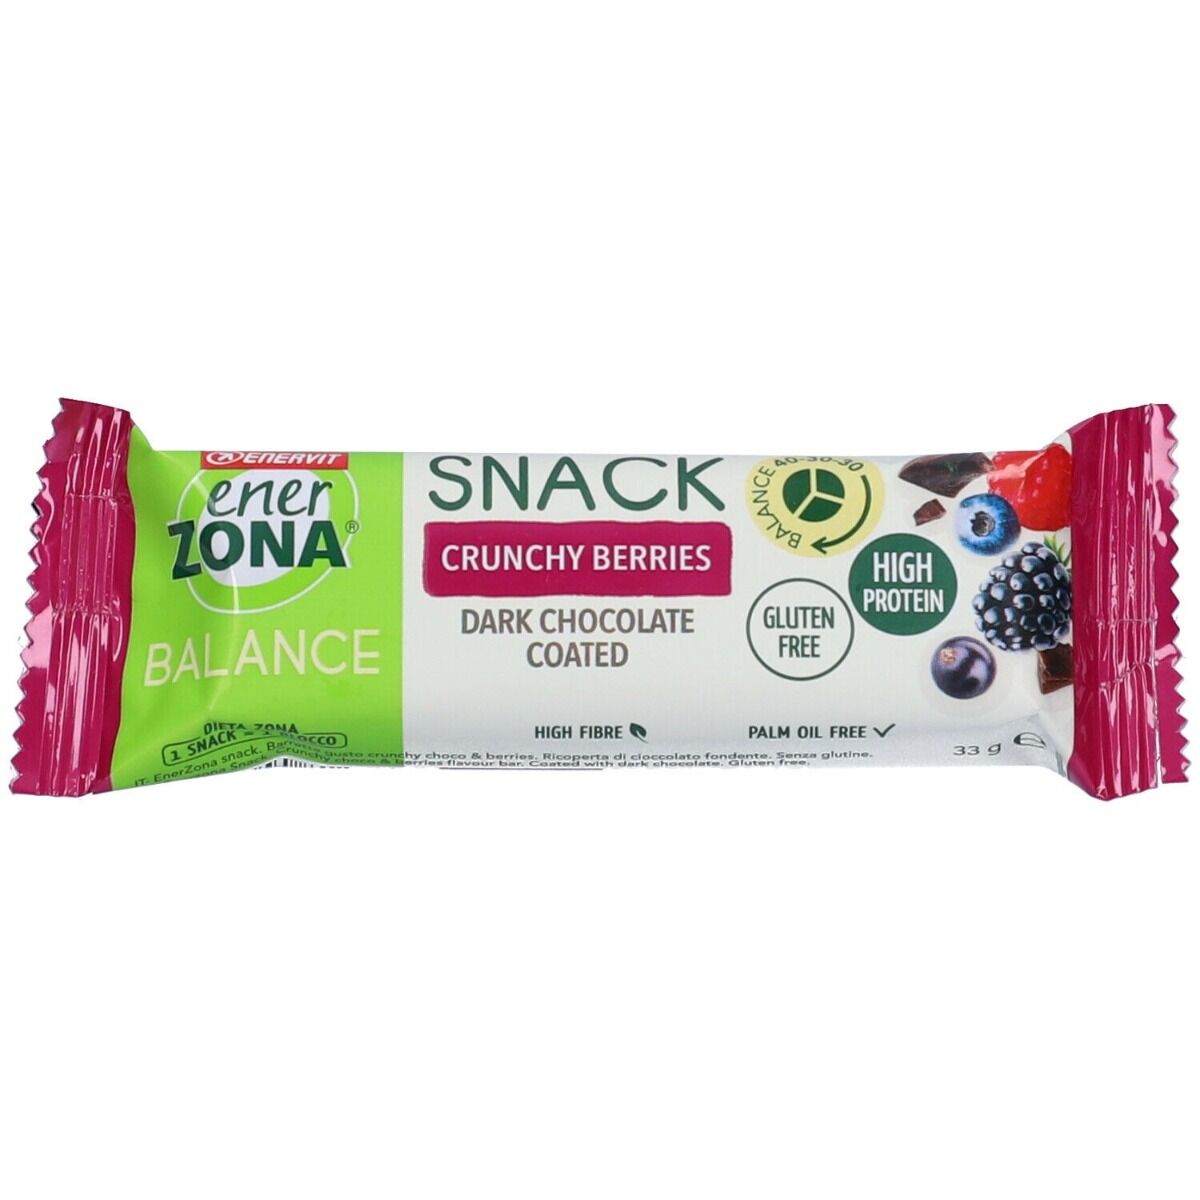 Enervit Enerzona Snack Bilanciato Crunchy Berries 33 g